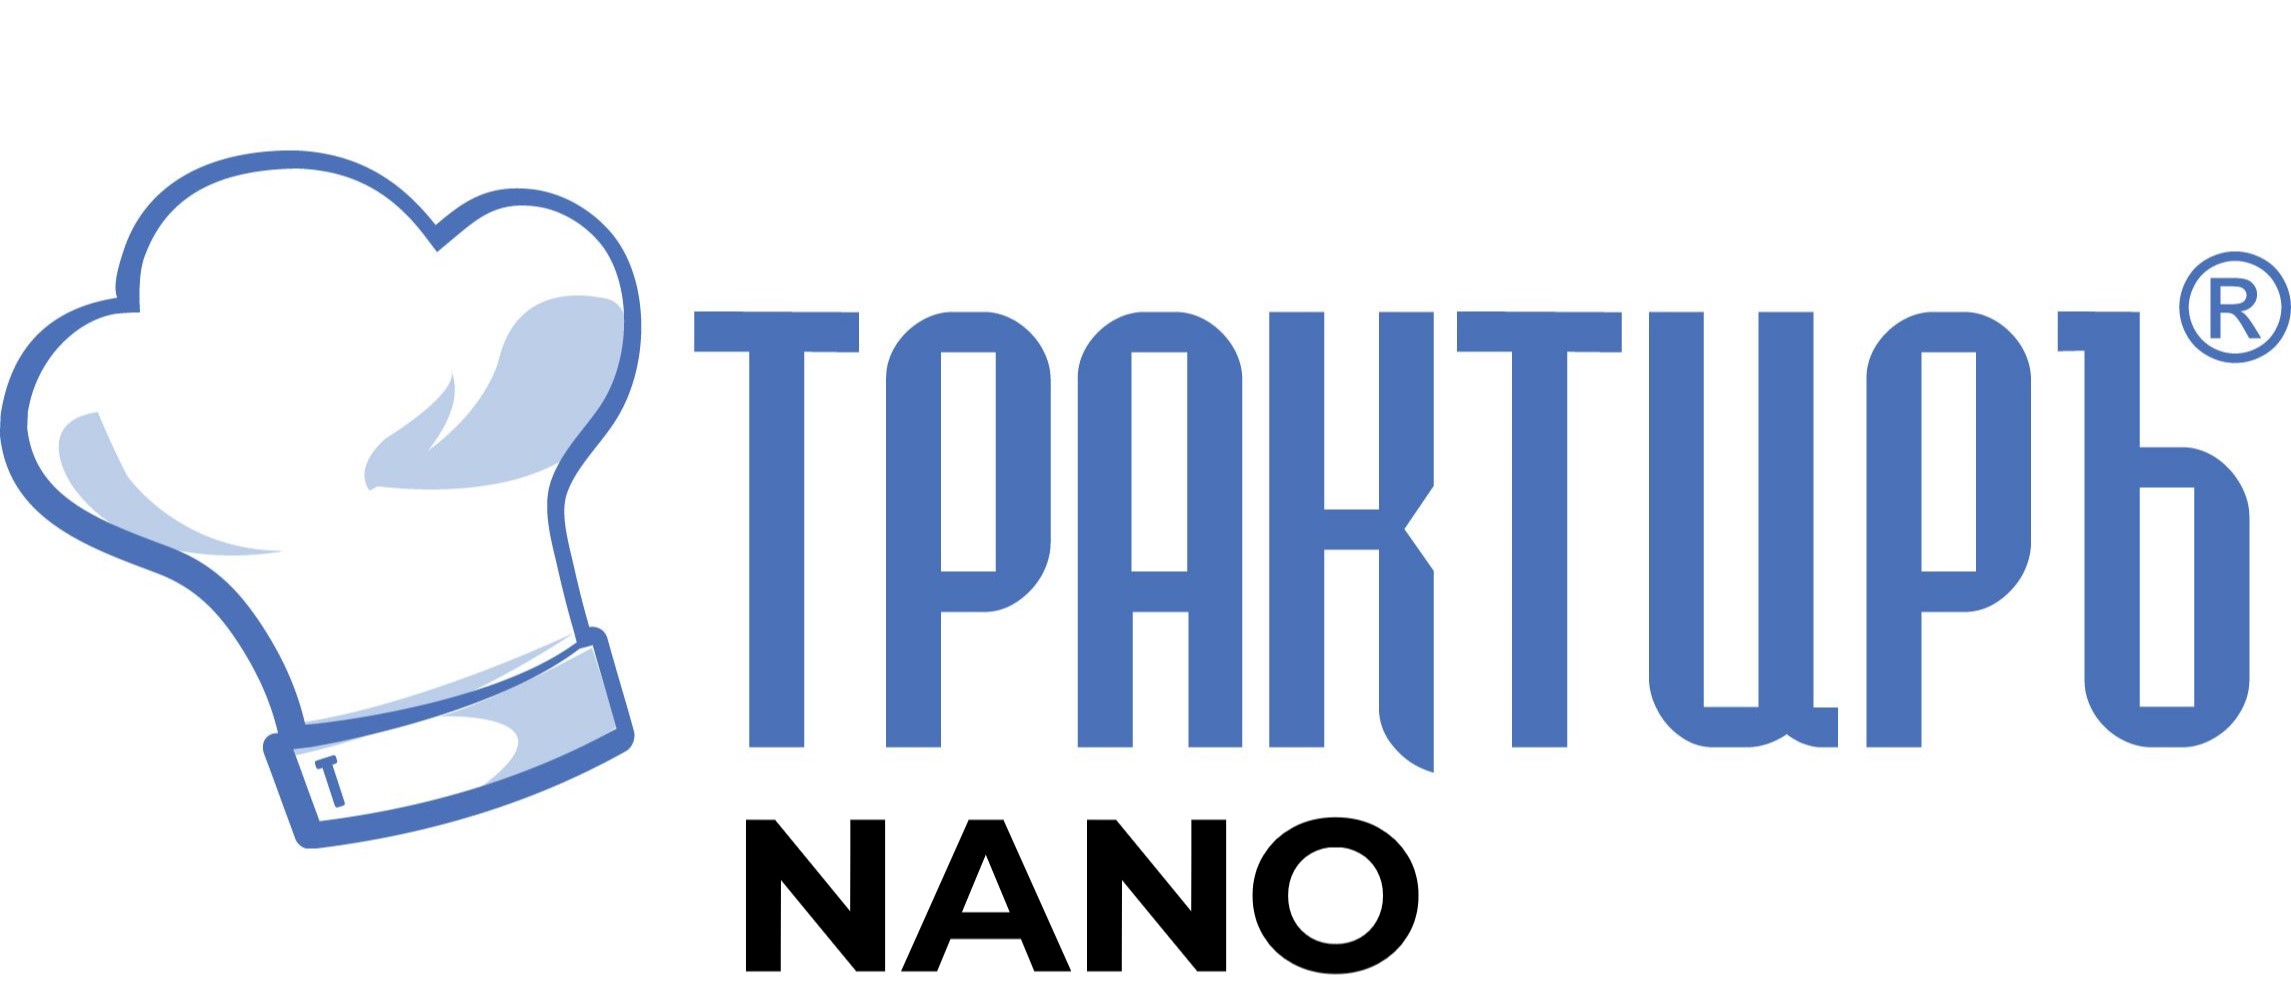 Конфигурация Трактиръ: Nano (Основная поставка) в Воронеже